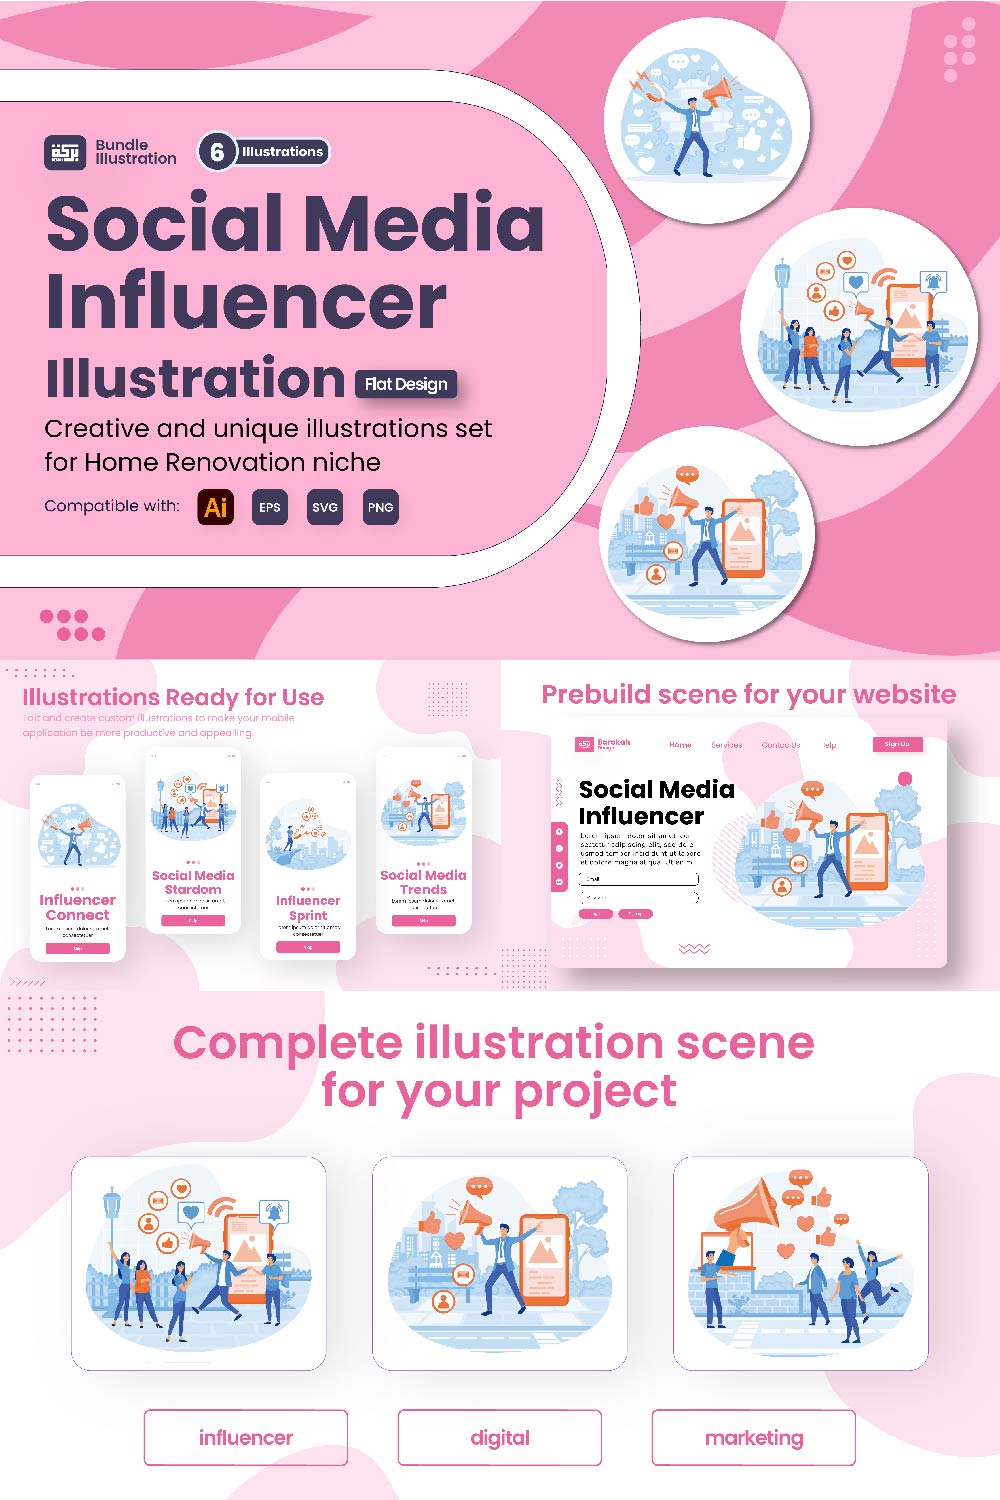 Illustration of Social Media Influencer pinterest preview image.